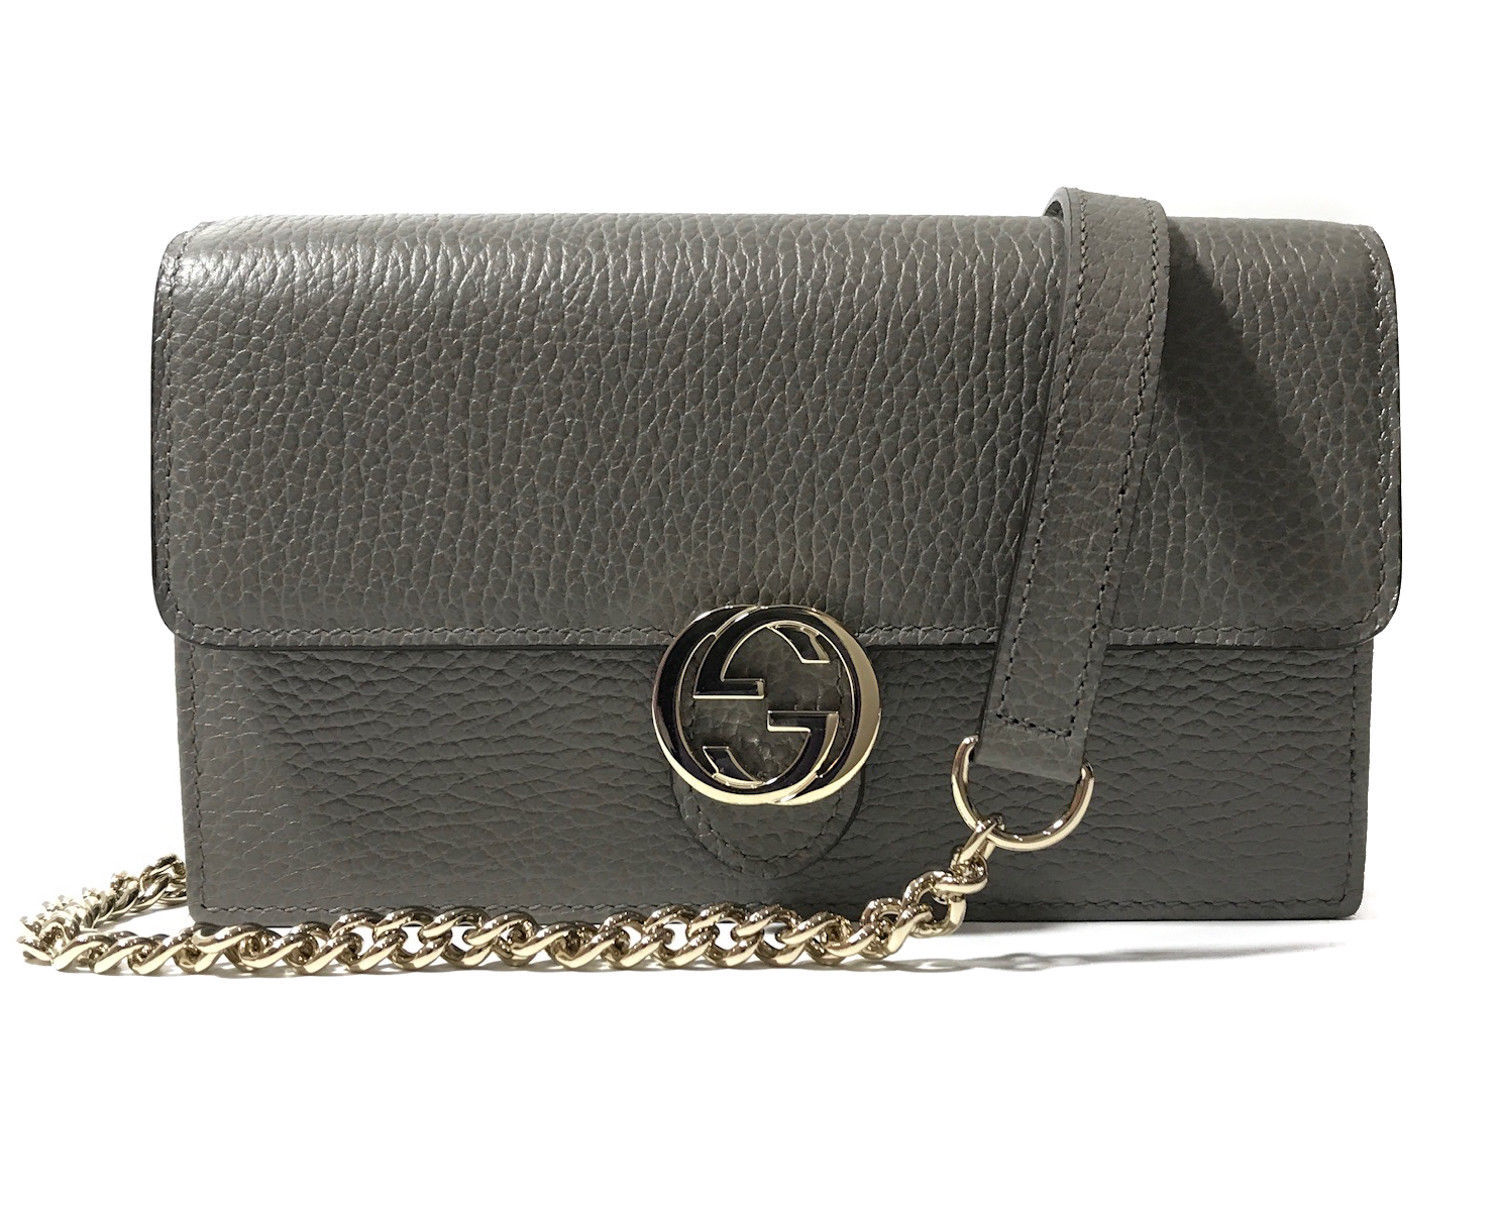 NWT GUCCI 510314 Interlocking Leather Chain Cross Body Wallet Bag, Grey - $989.50